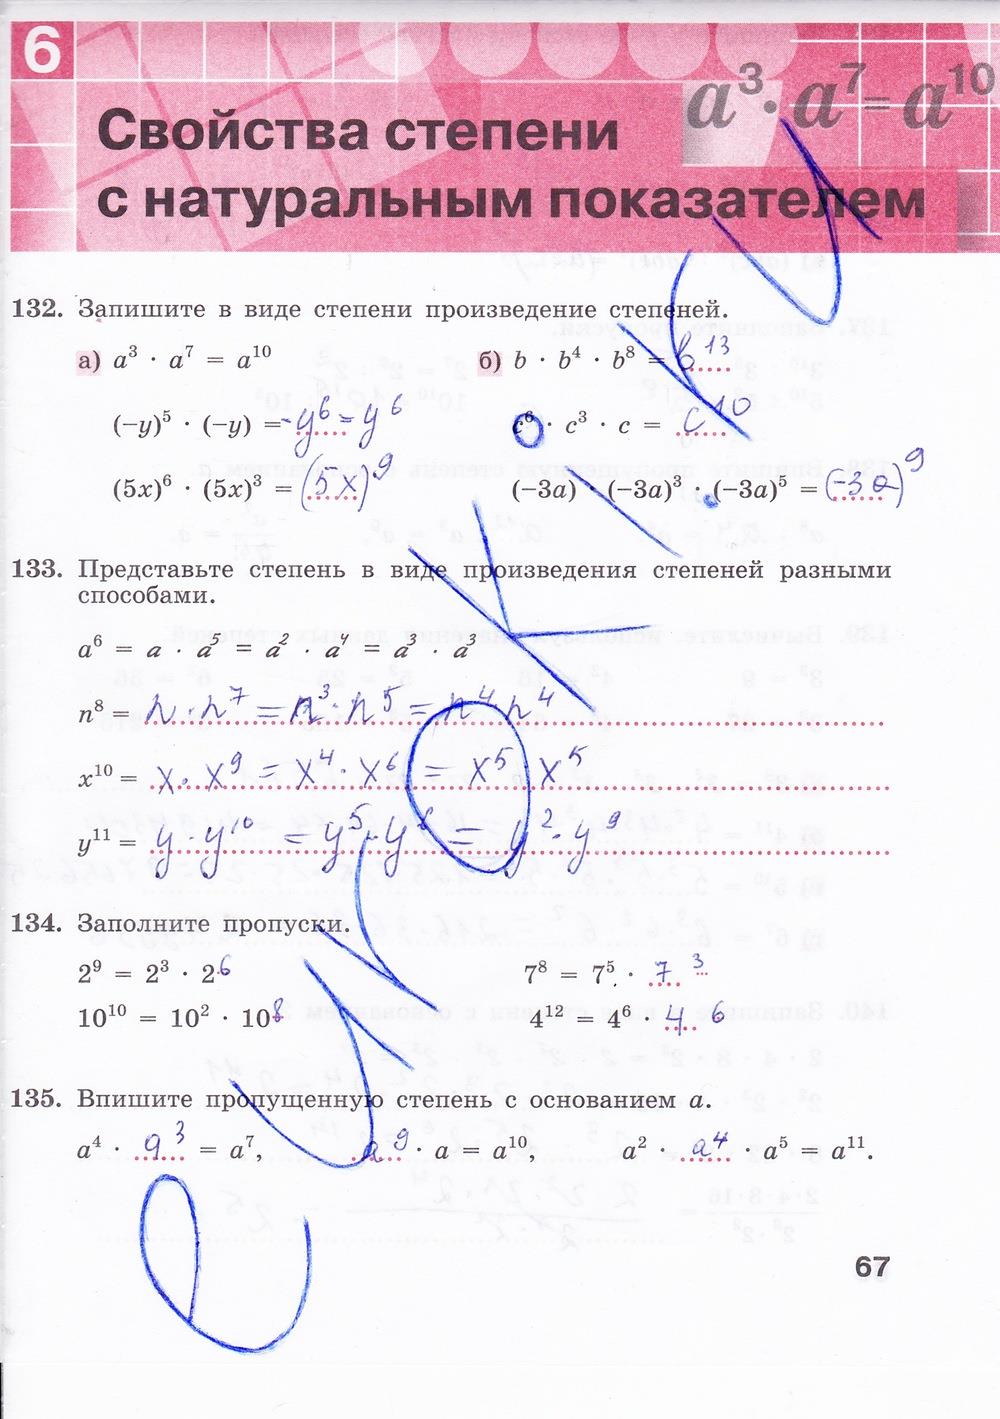 гдз 7 класс рабочая тетрадь страница 67 алгебра Минаева, Рослова